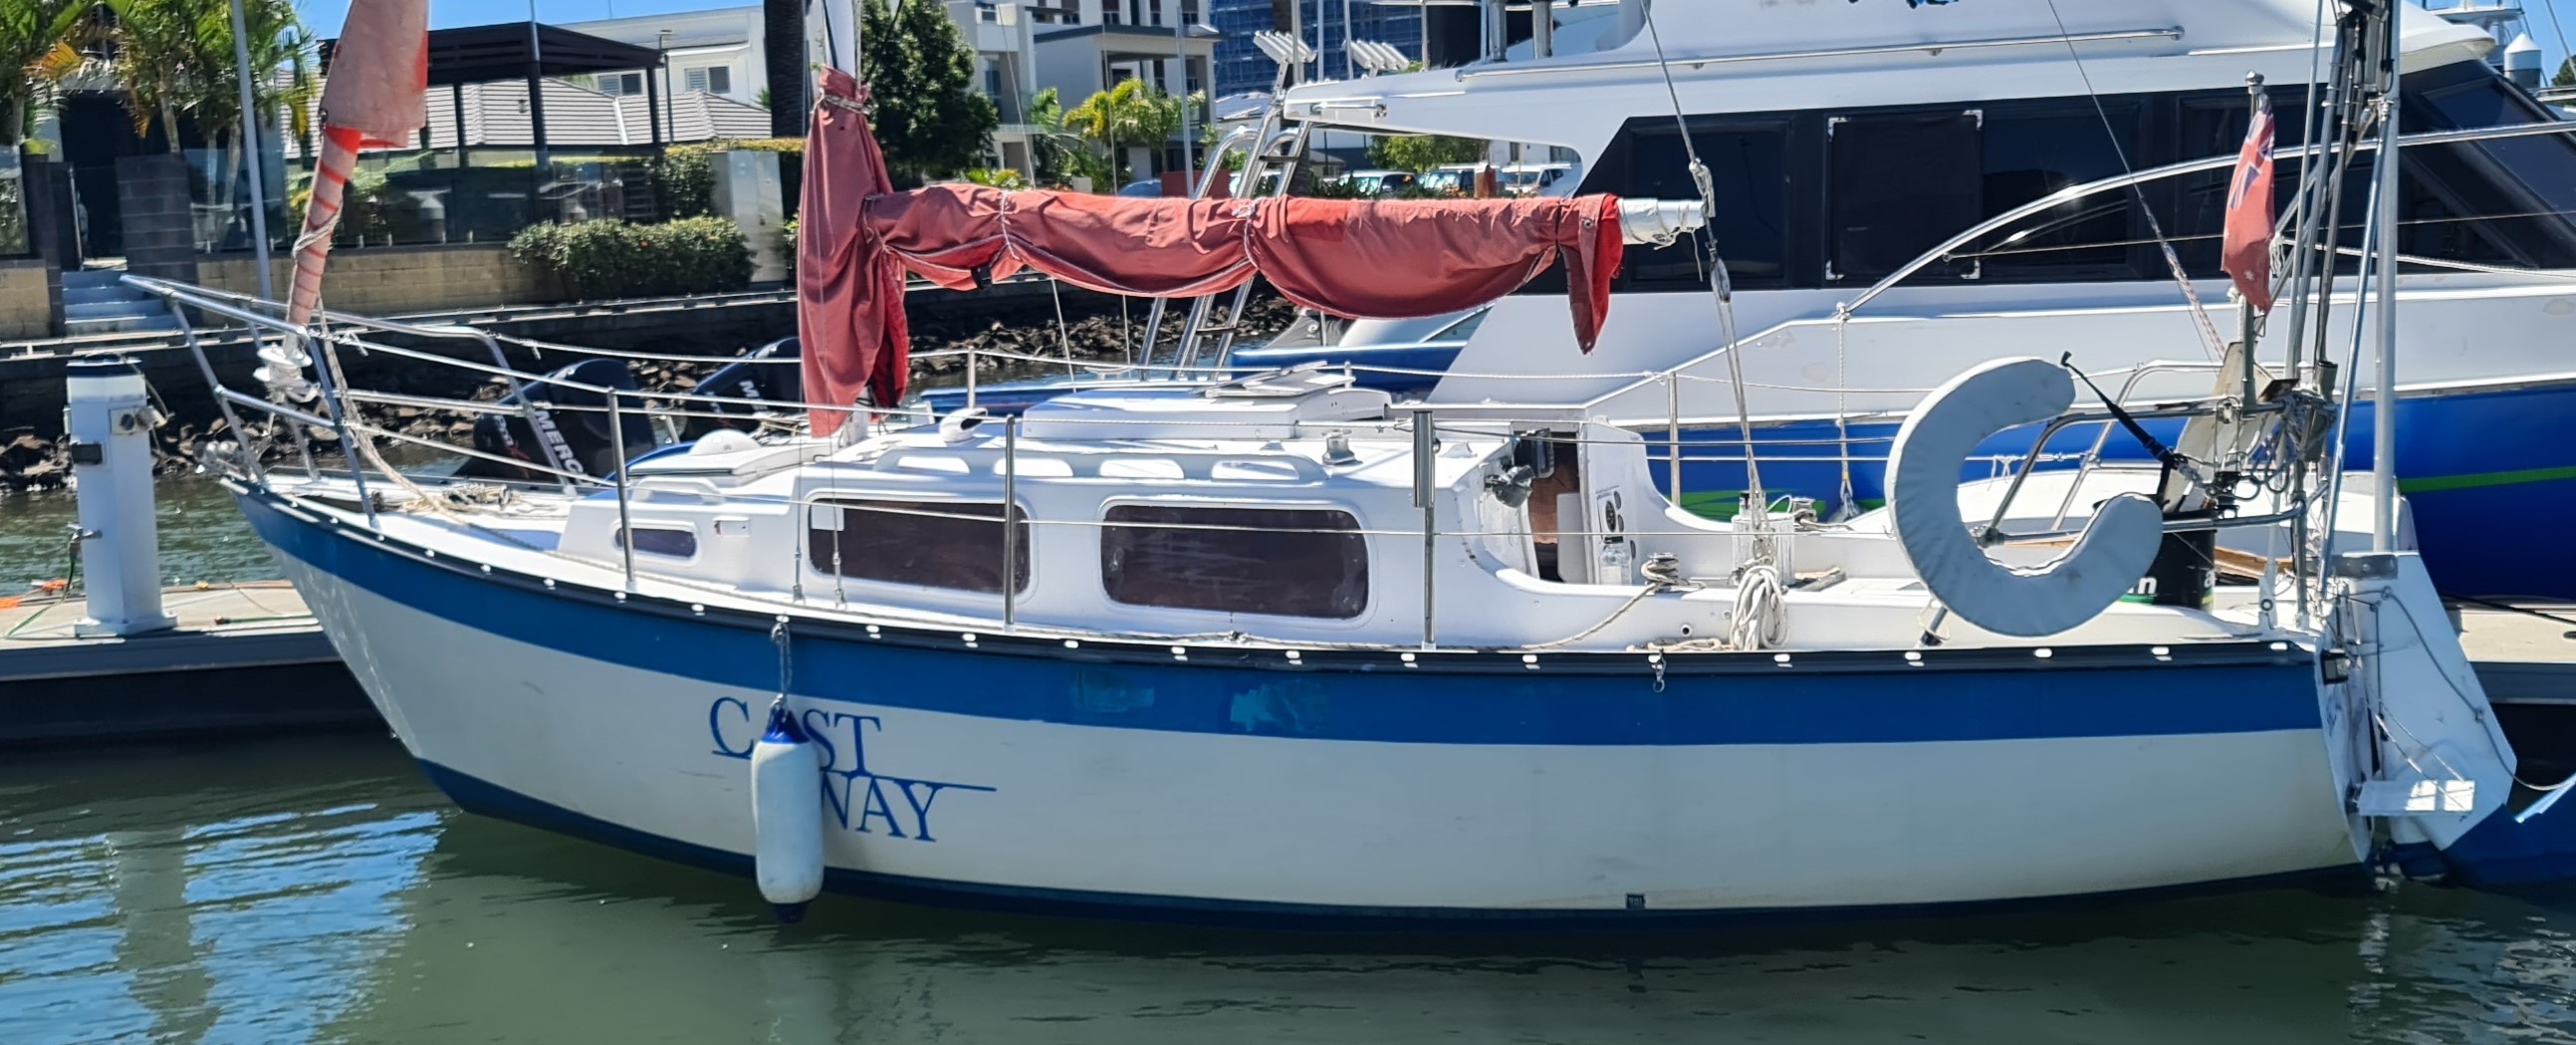 1978 Bruce Roberts 25’ Sailing Yacht “Cast Away”